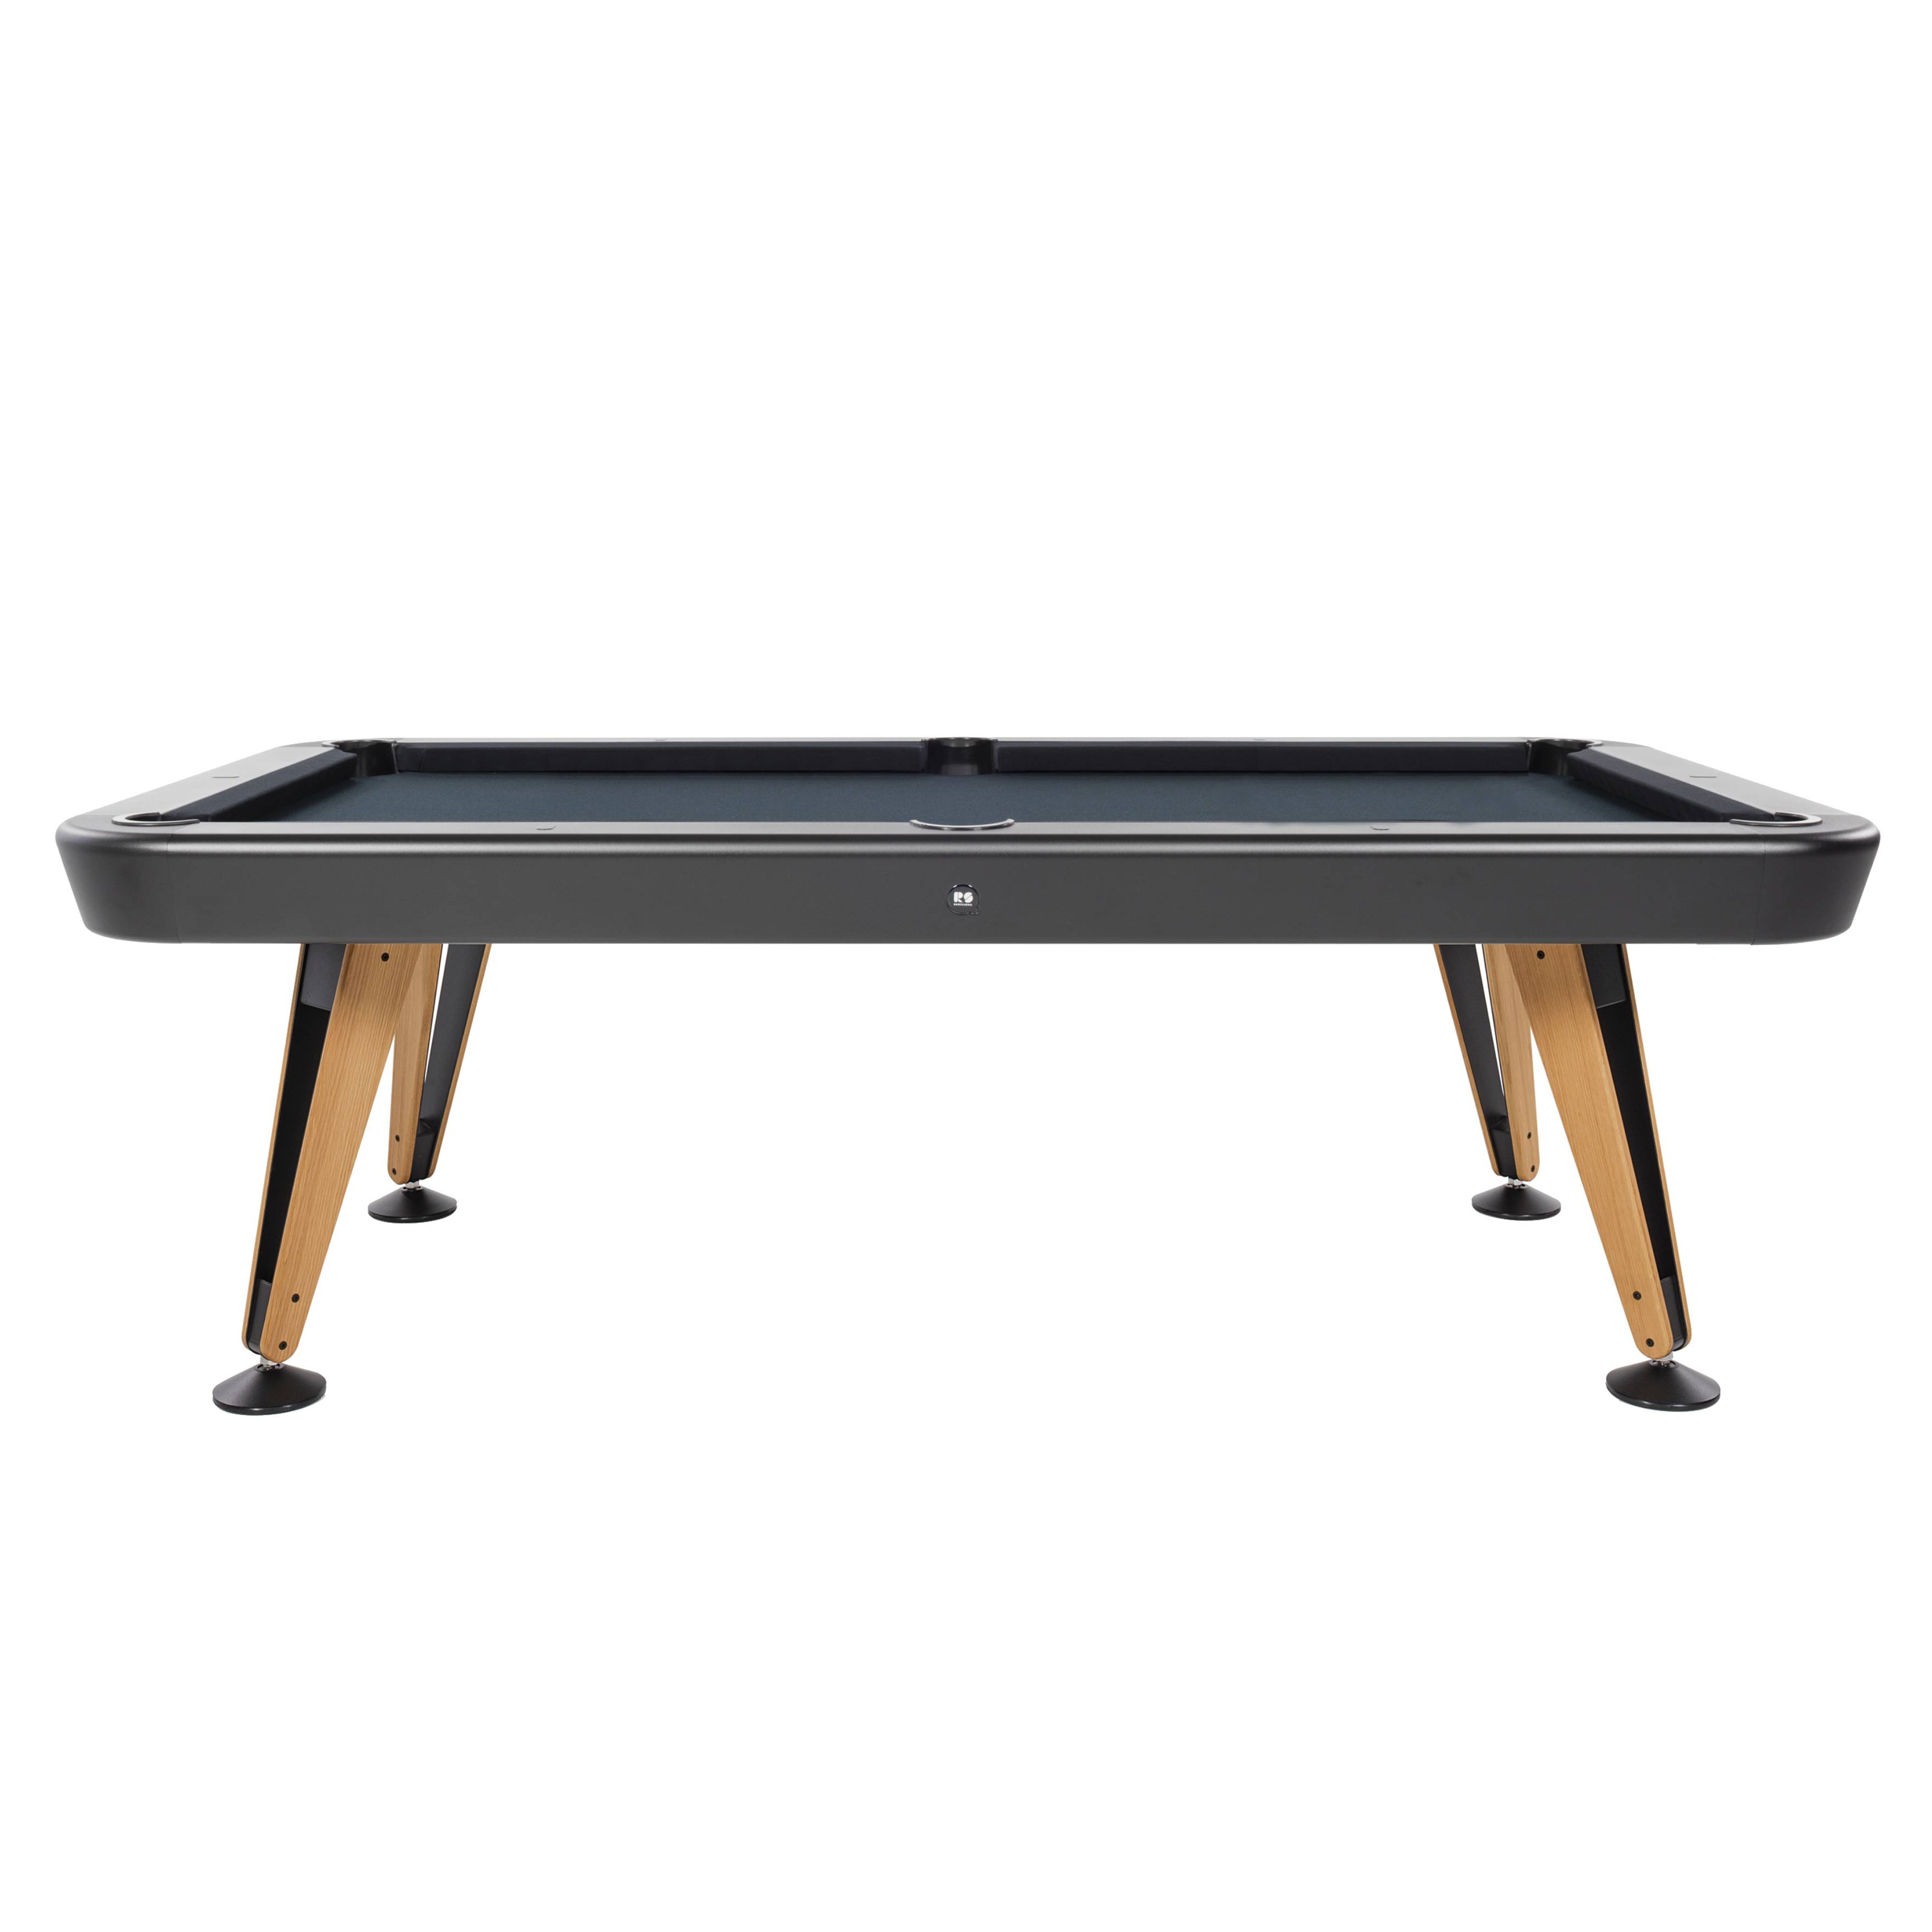 Diagonal Outdoor Pool Table: Large - 102.4" +  Black + Black